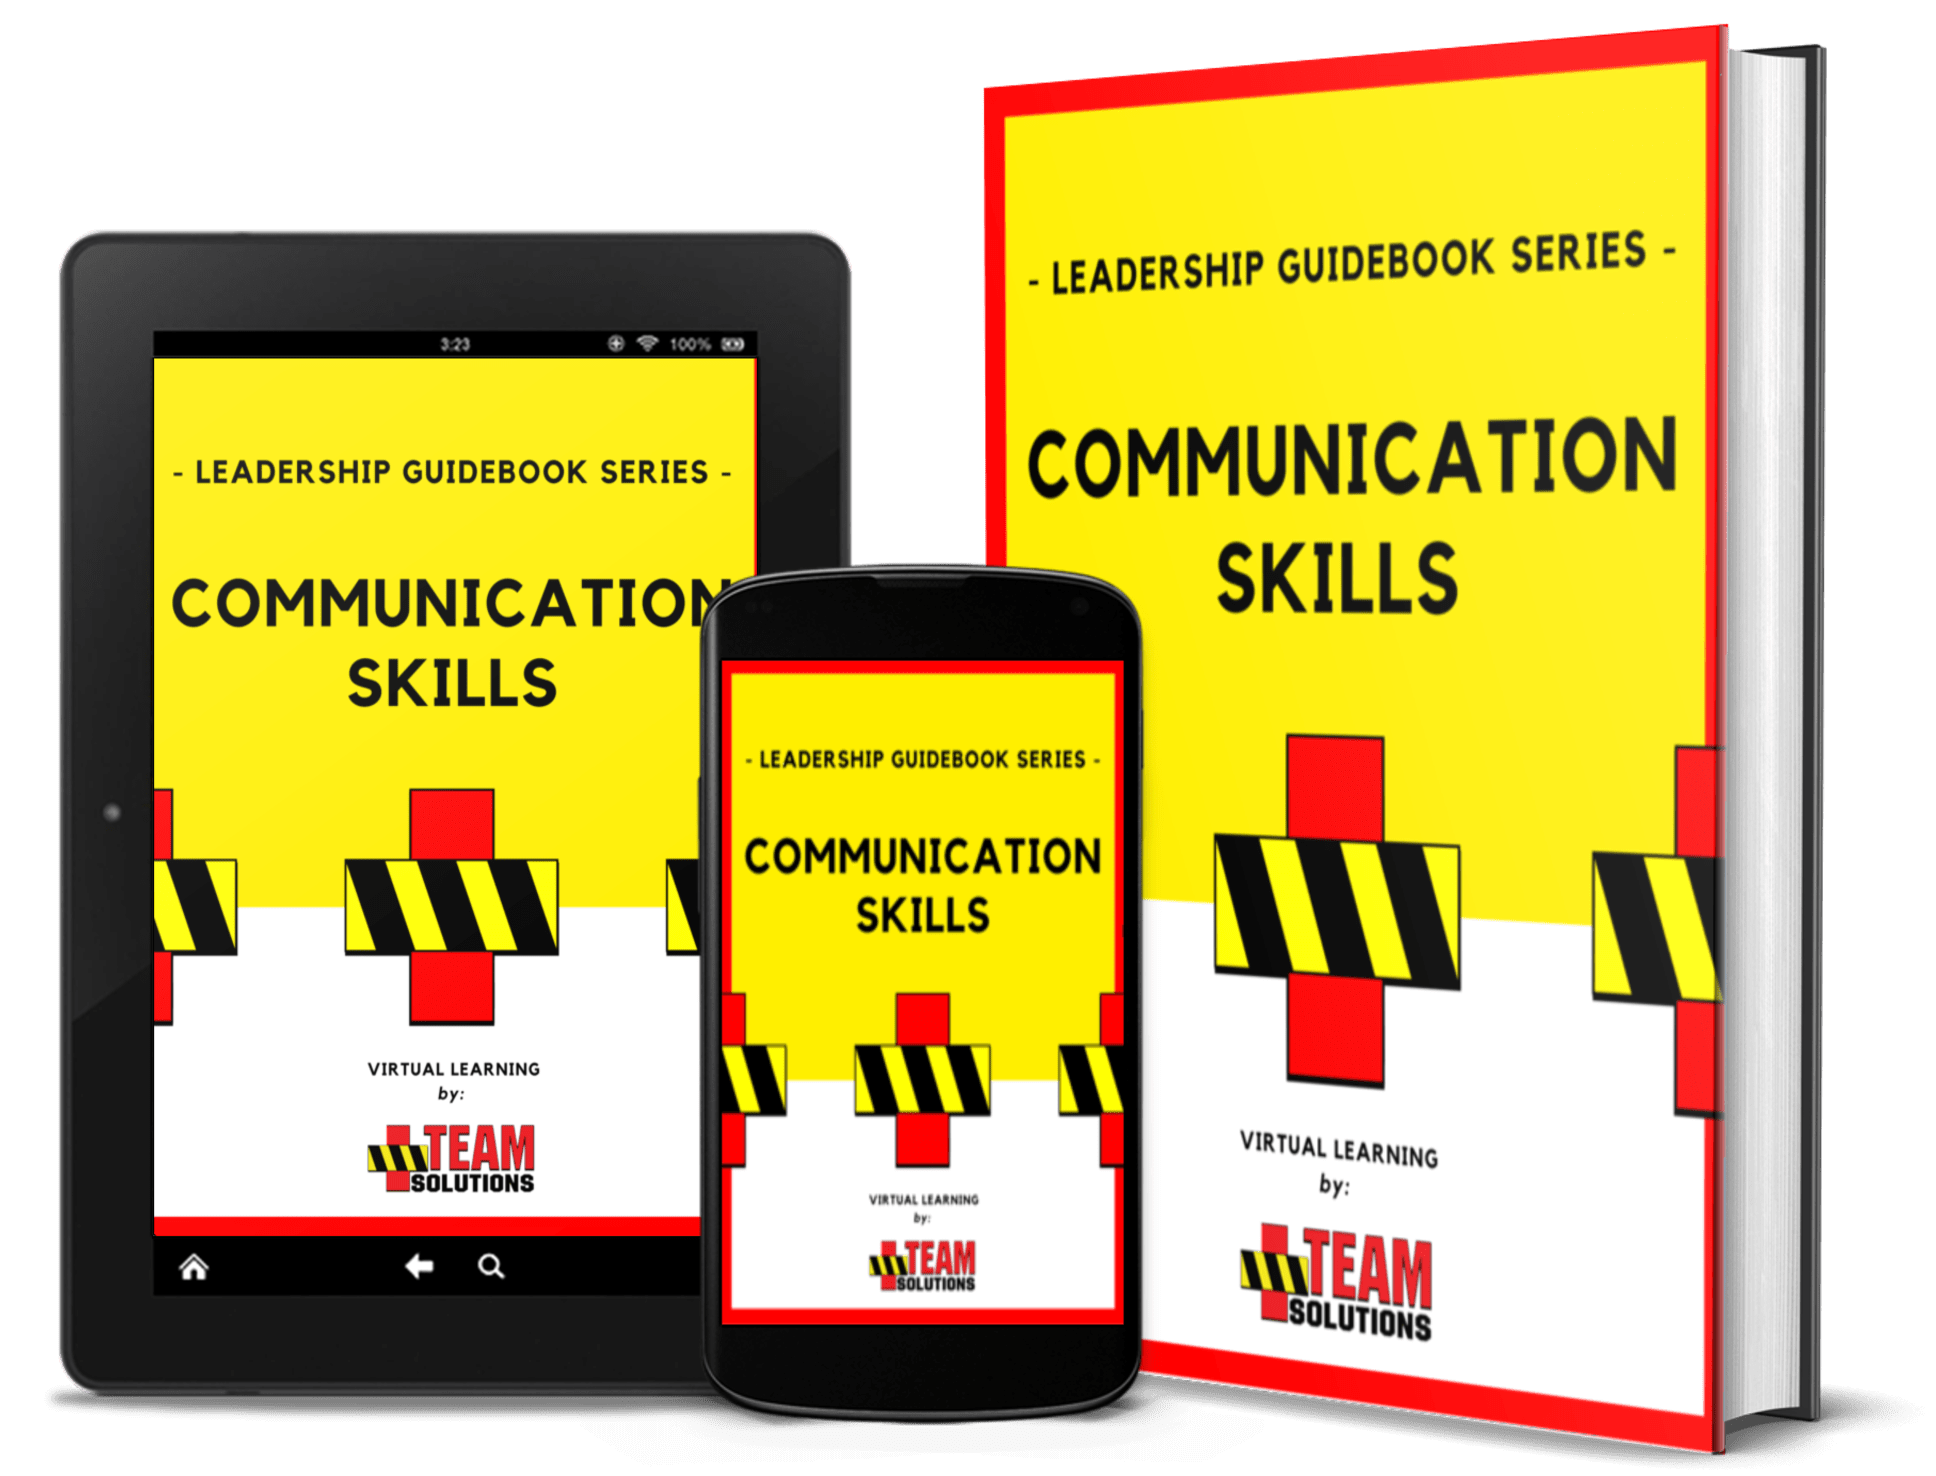 Communication Skills Guidebook Bundle by TEAM Solutions